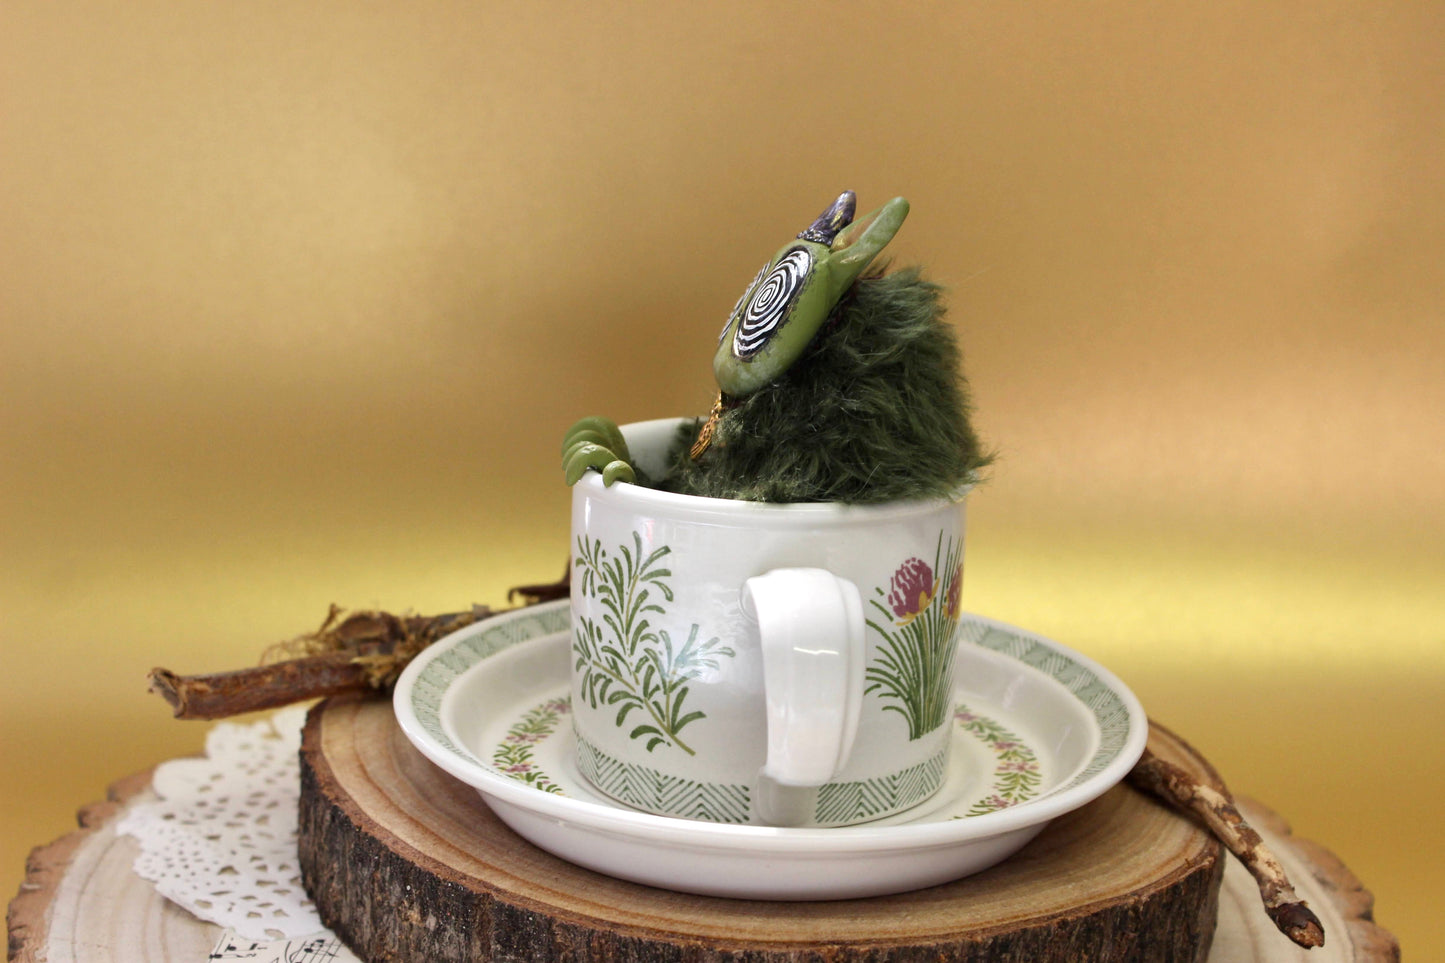 Birdie the Teacup Critter